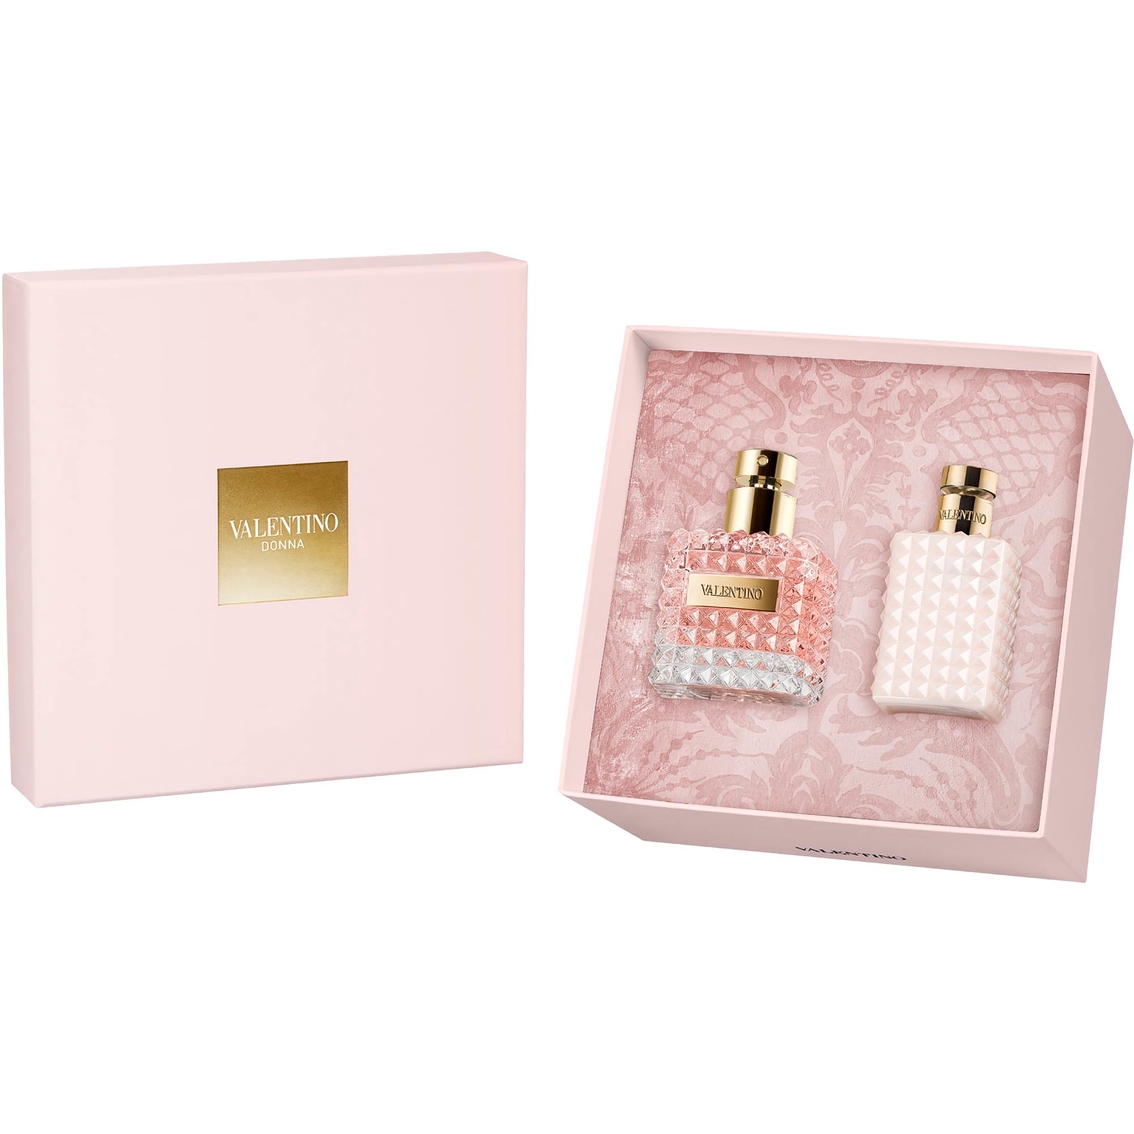 påske Gummi Fru Valentina Perfume Set Online Hotsell, UP TO 54% OFF | www.liquats.com